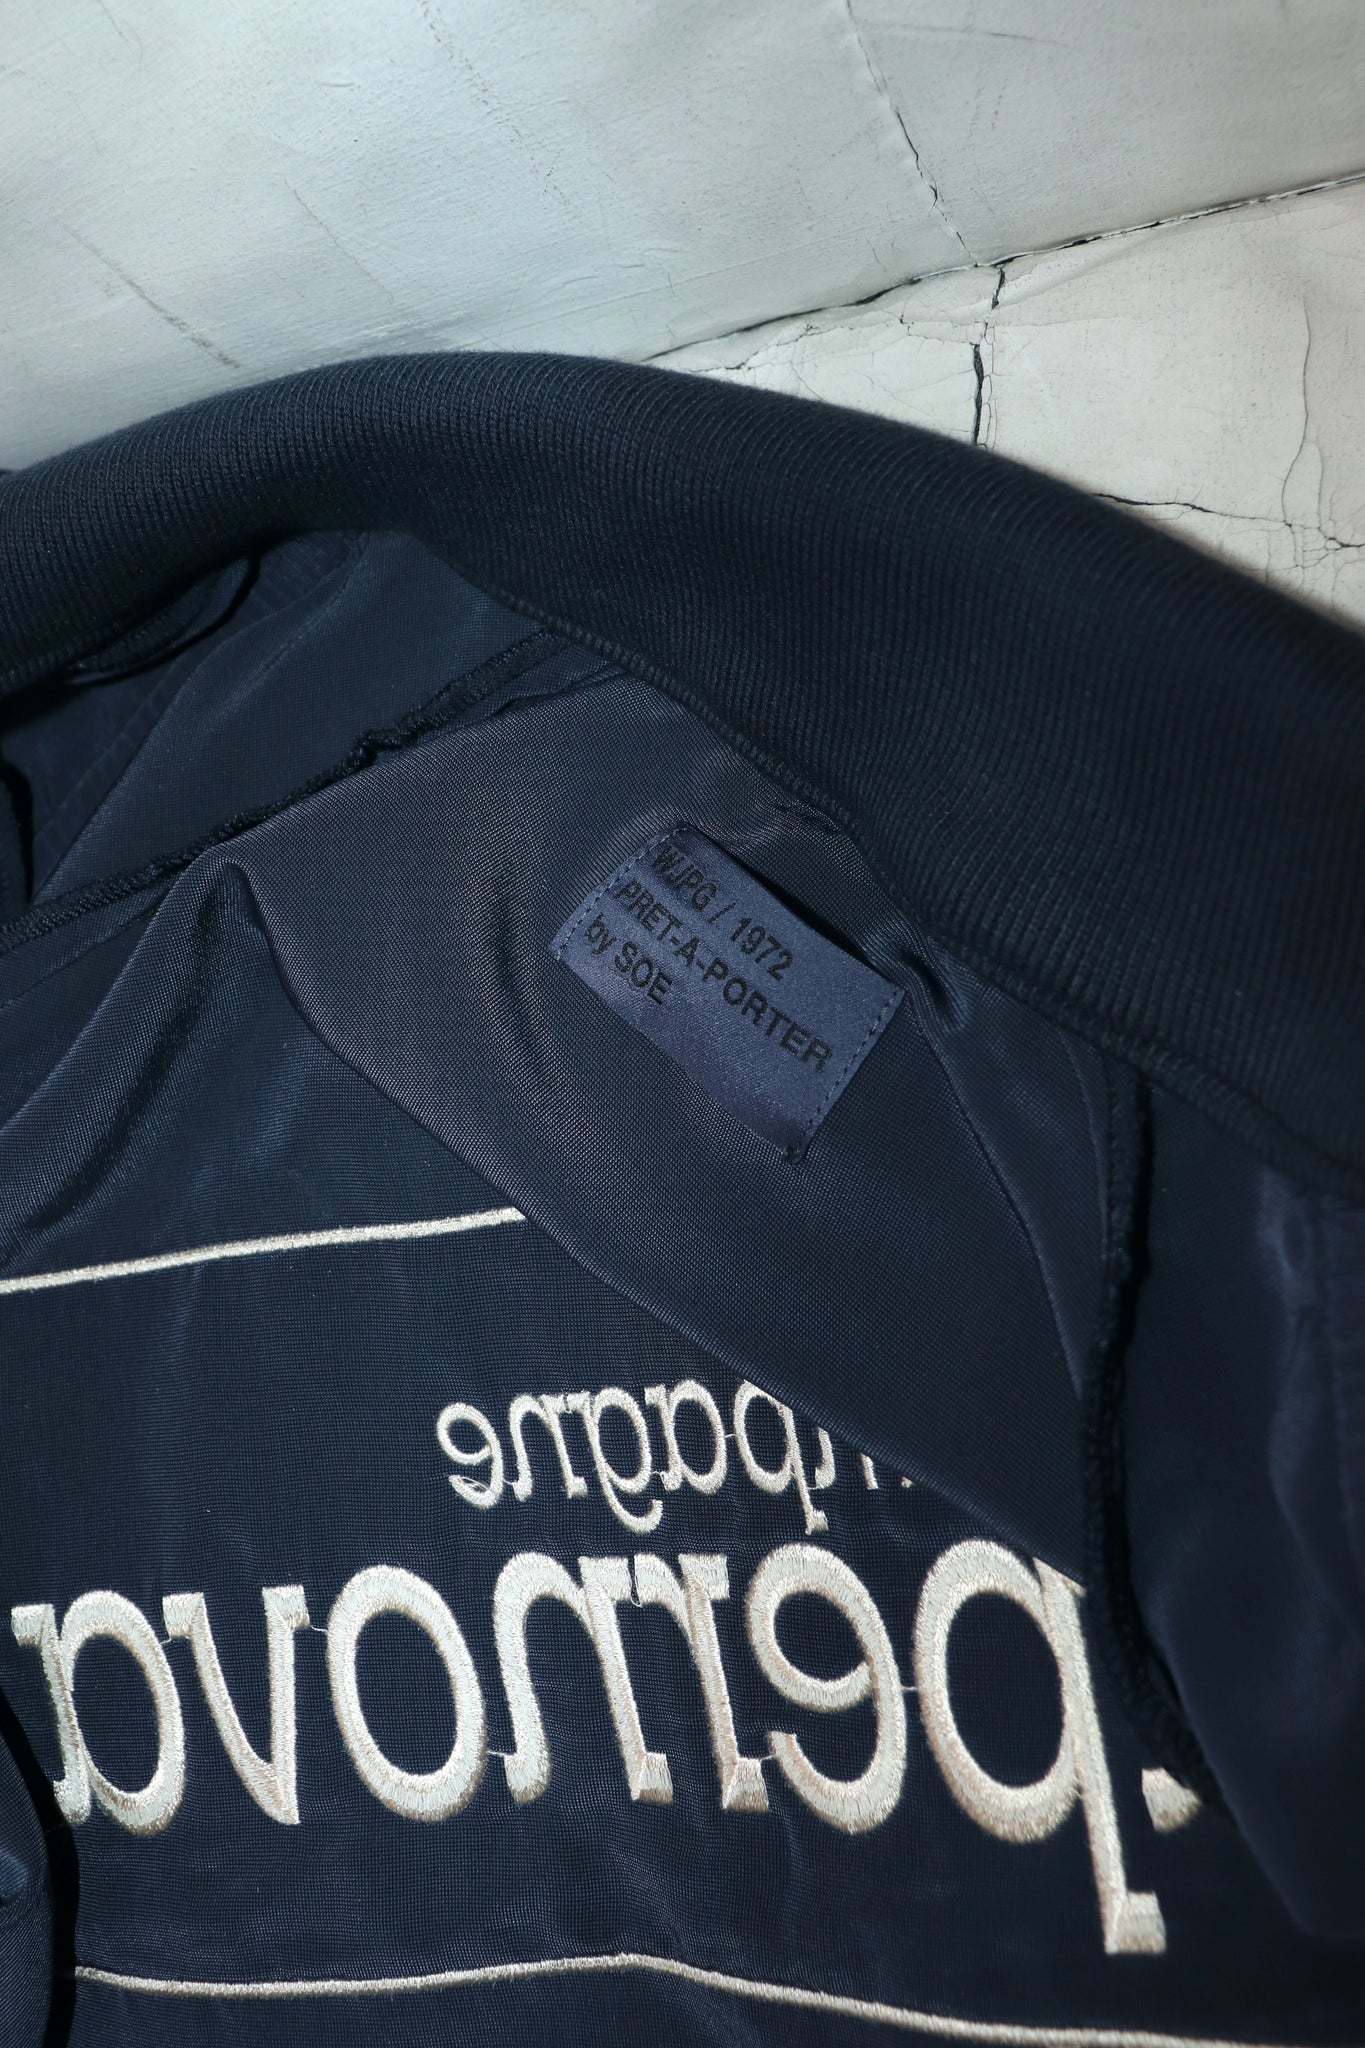 soe 23ss Velour Track Jacket "Champagne Supernova”(BLACK)を使用したスタイリング画像